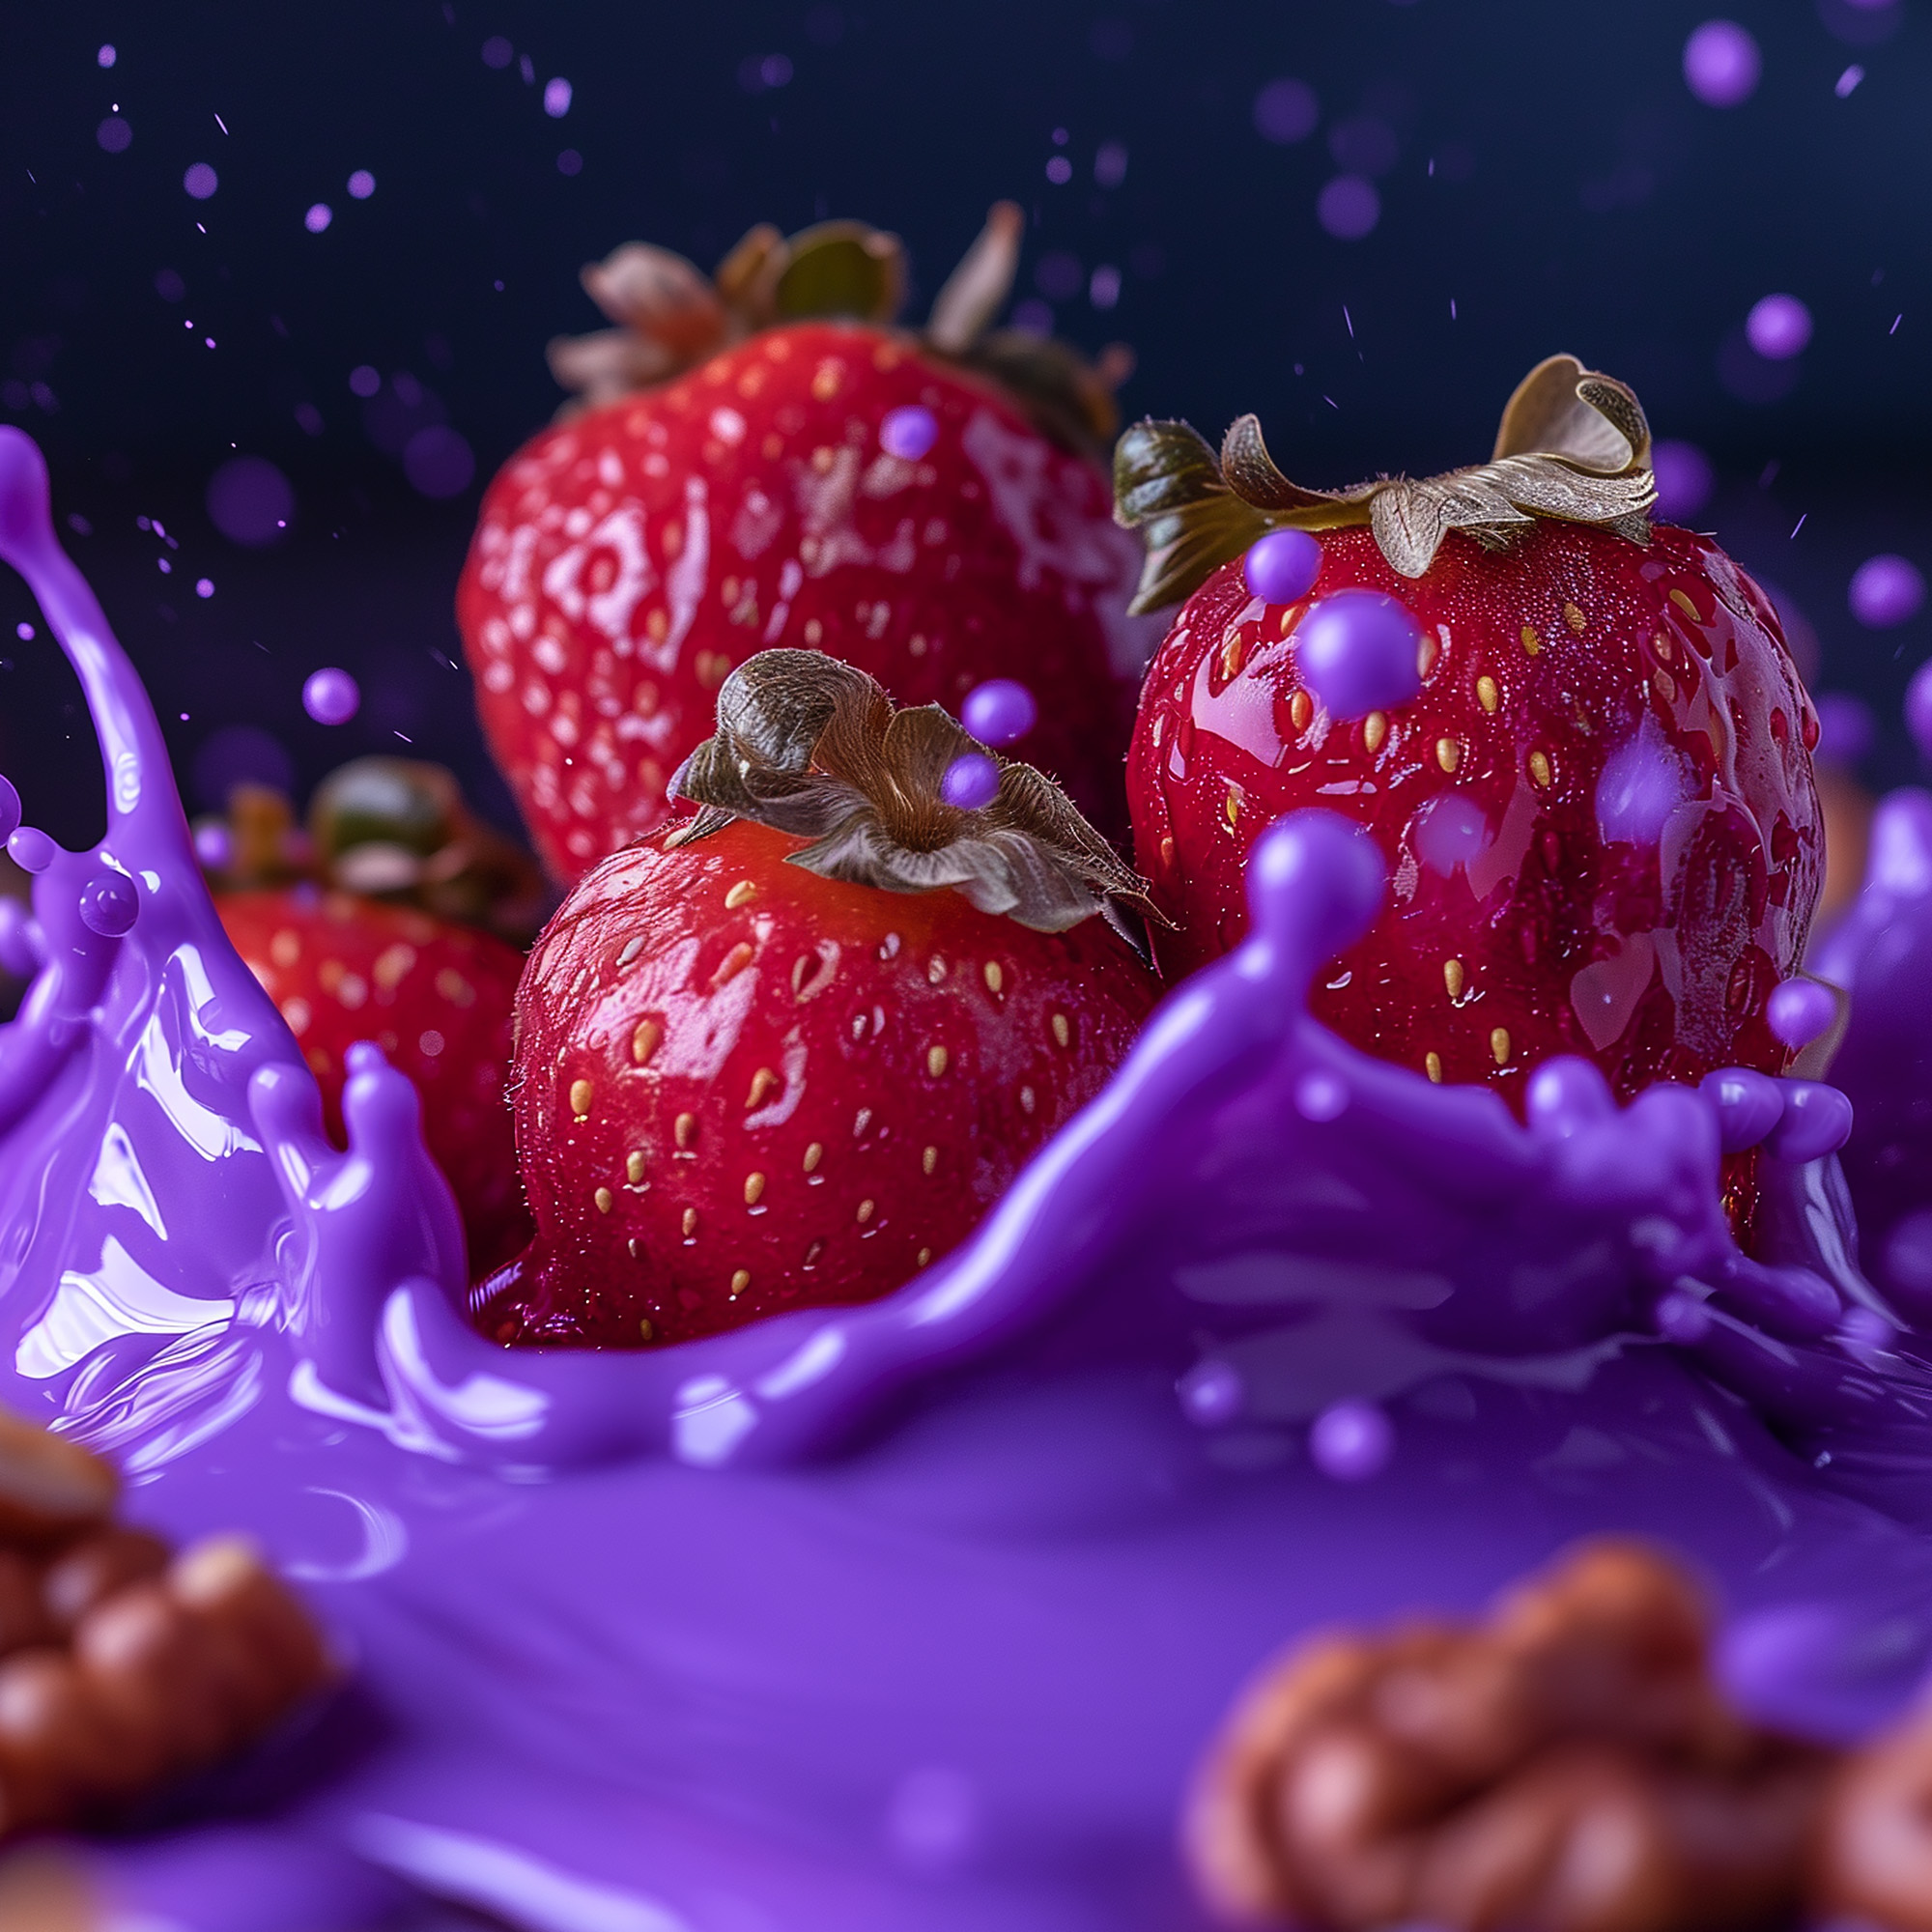 ai-images-slide-_0006_dblumx_a_splash_of_purple_liquid_with_strawberries_and_walnuts__b307fa96-a6ac-4859-9006-a620ecd6e6